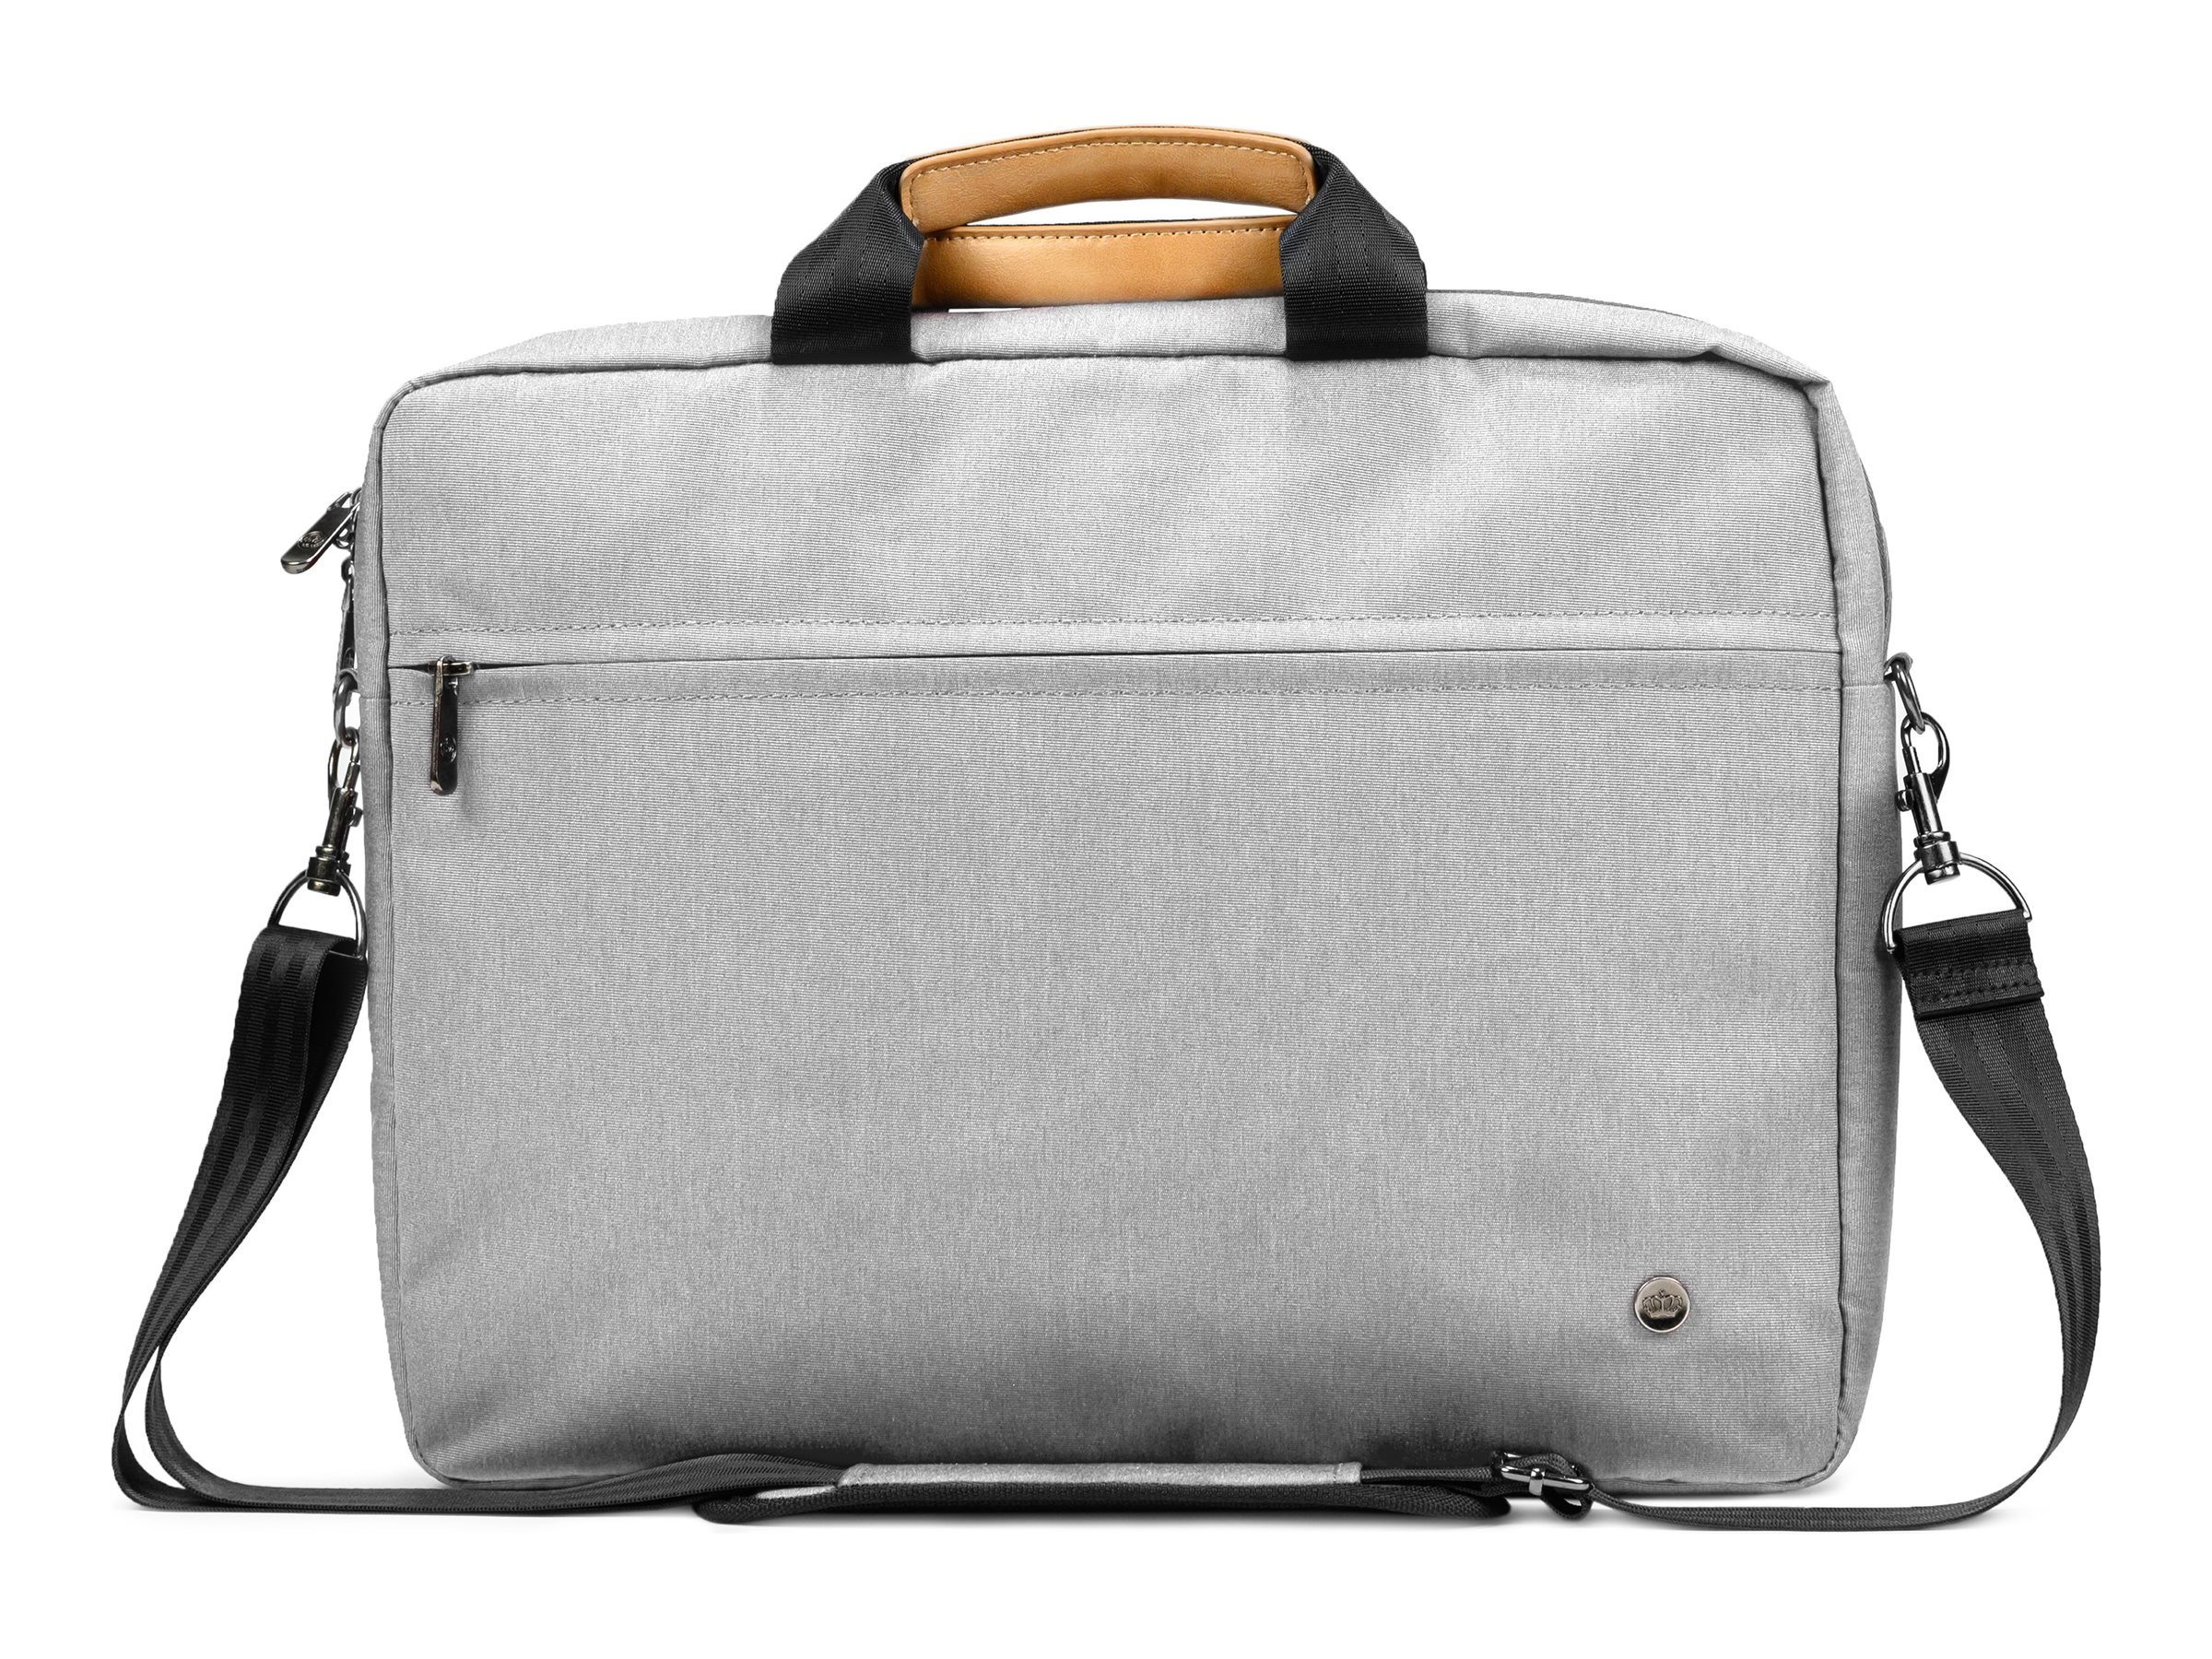 PKG Spadina Messenger Bag - Light Gray